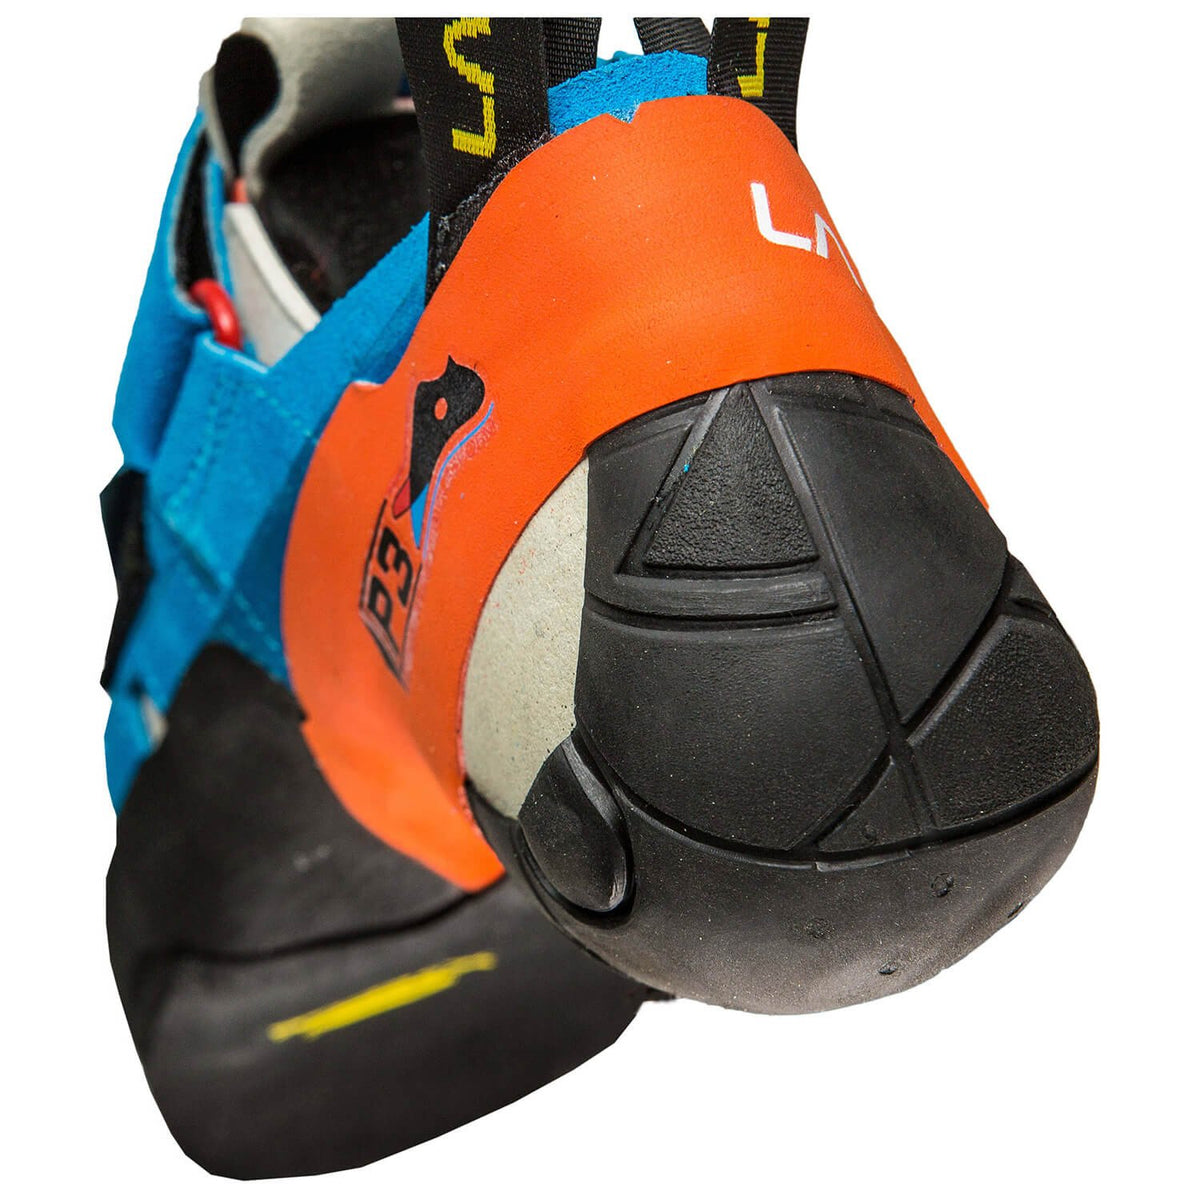 La Sportiva Otaki climbing shoe, view of the heel design